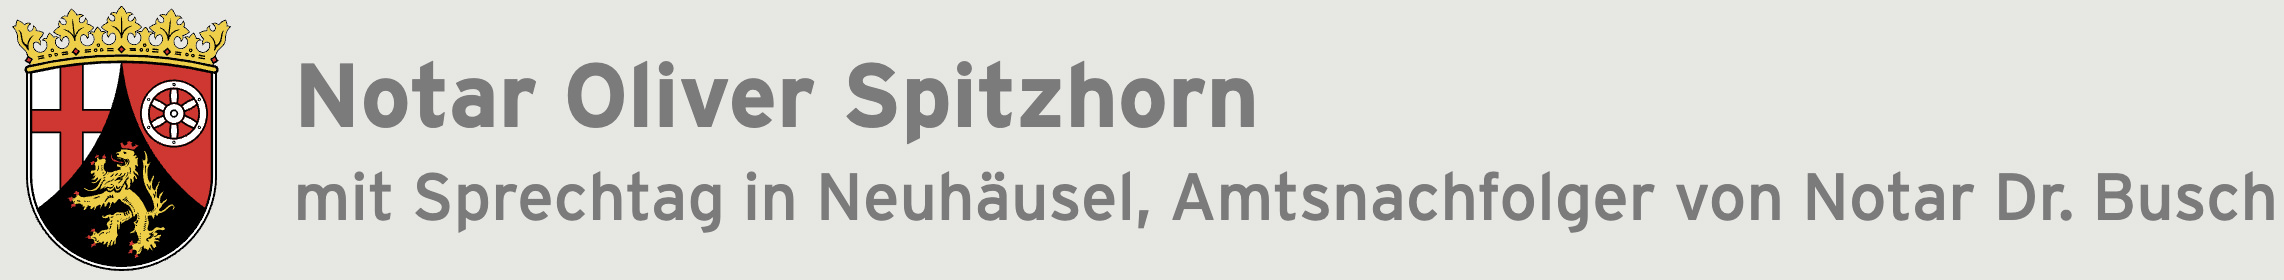 spitzhorn_logo